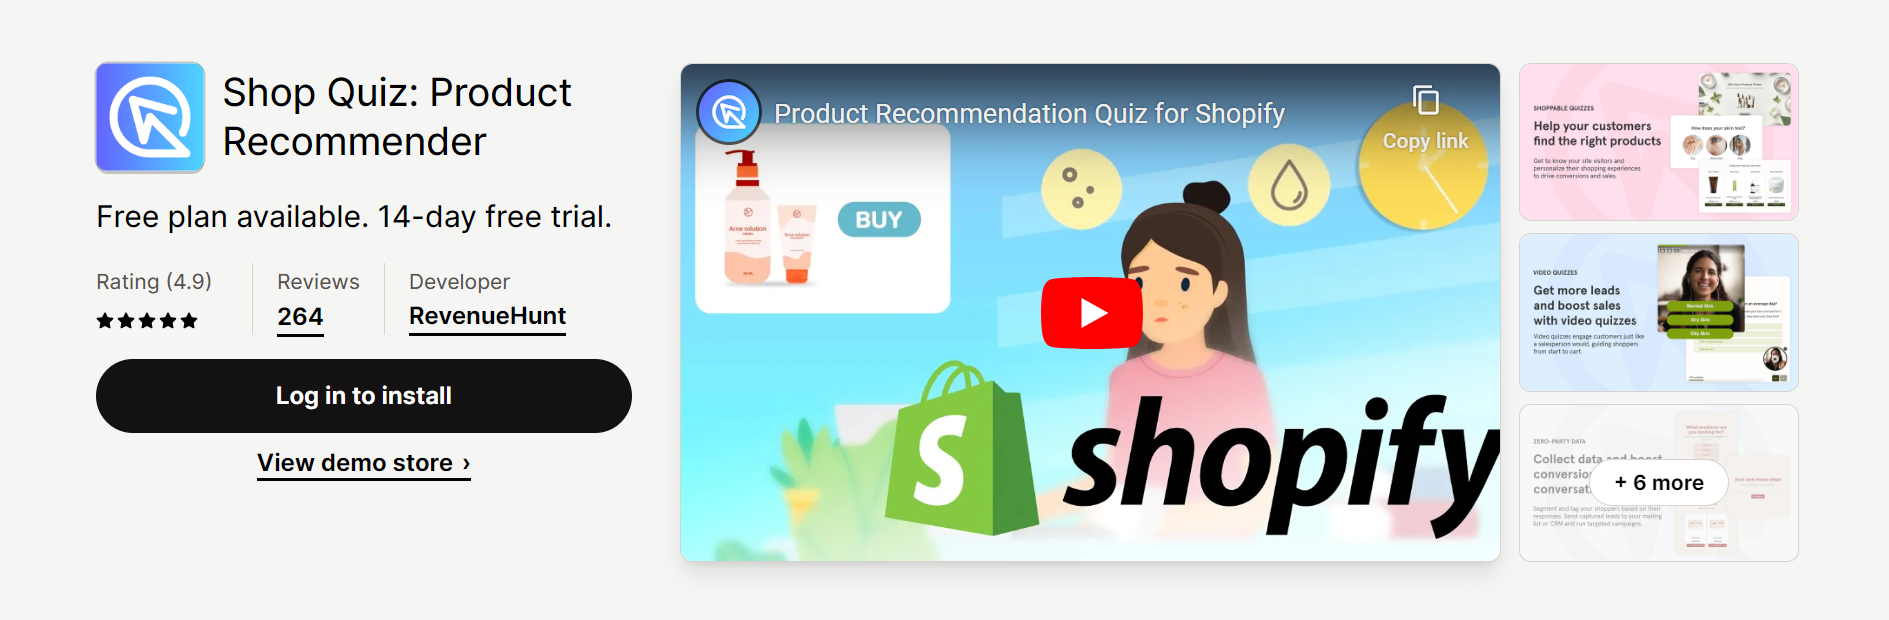 Shop Quiz: Product Recommender